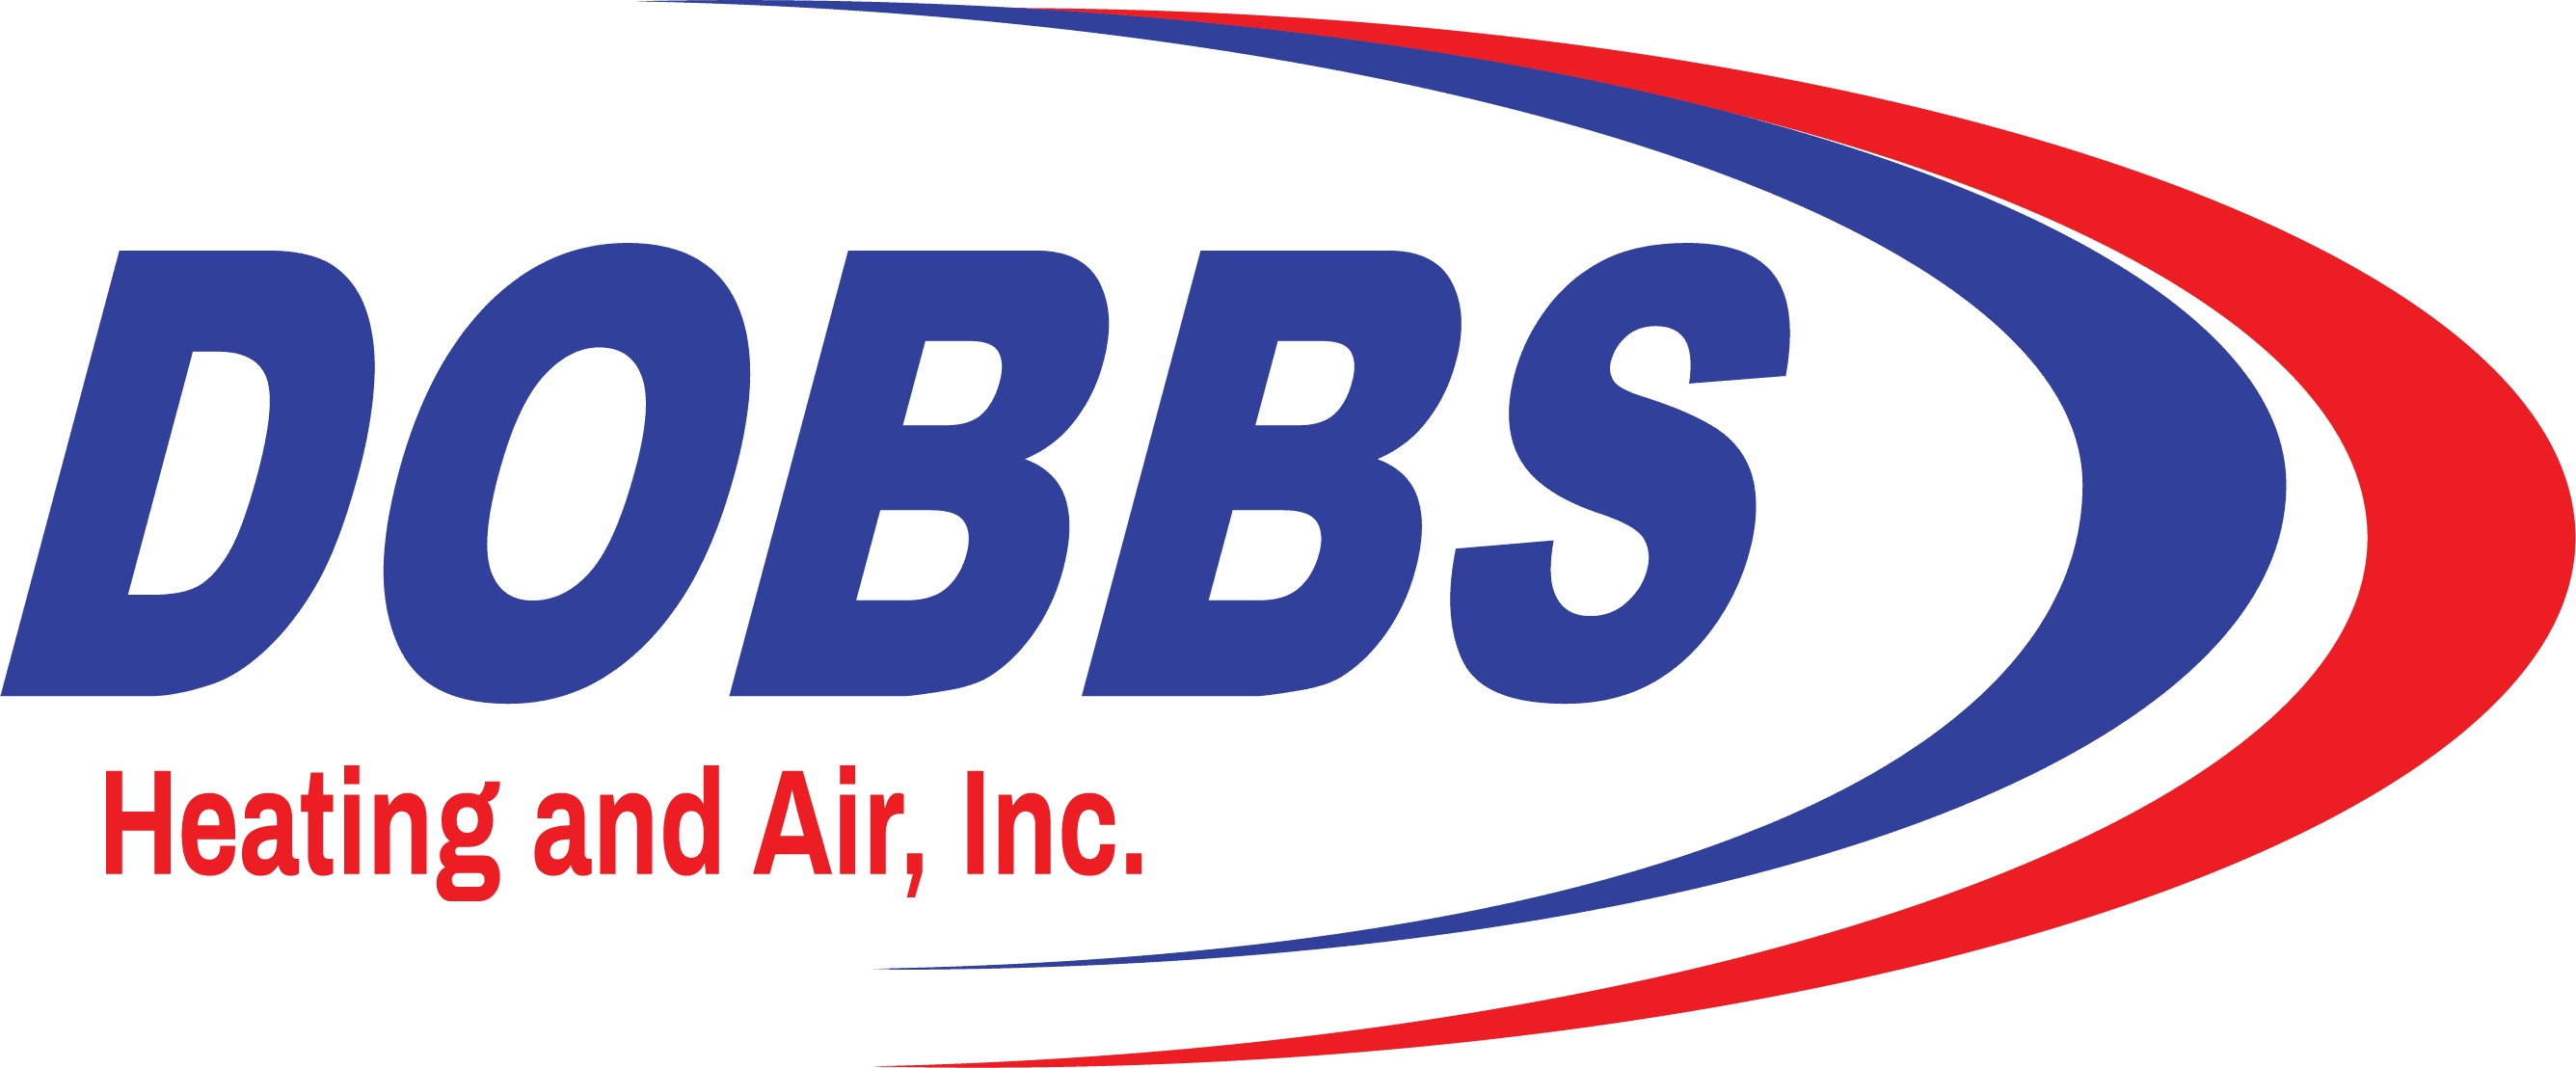 Dobbs Heating and Air Inc.